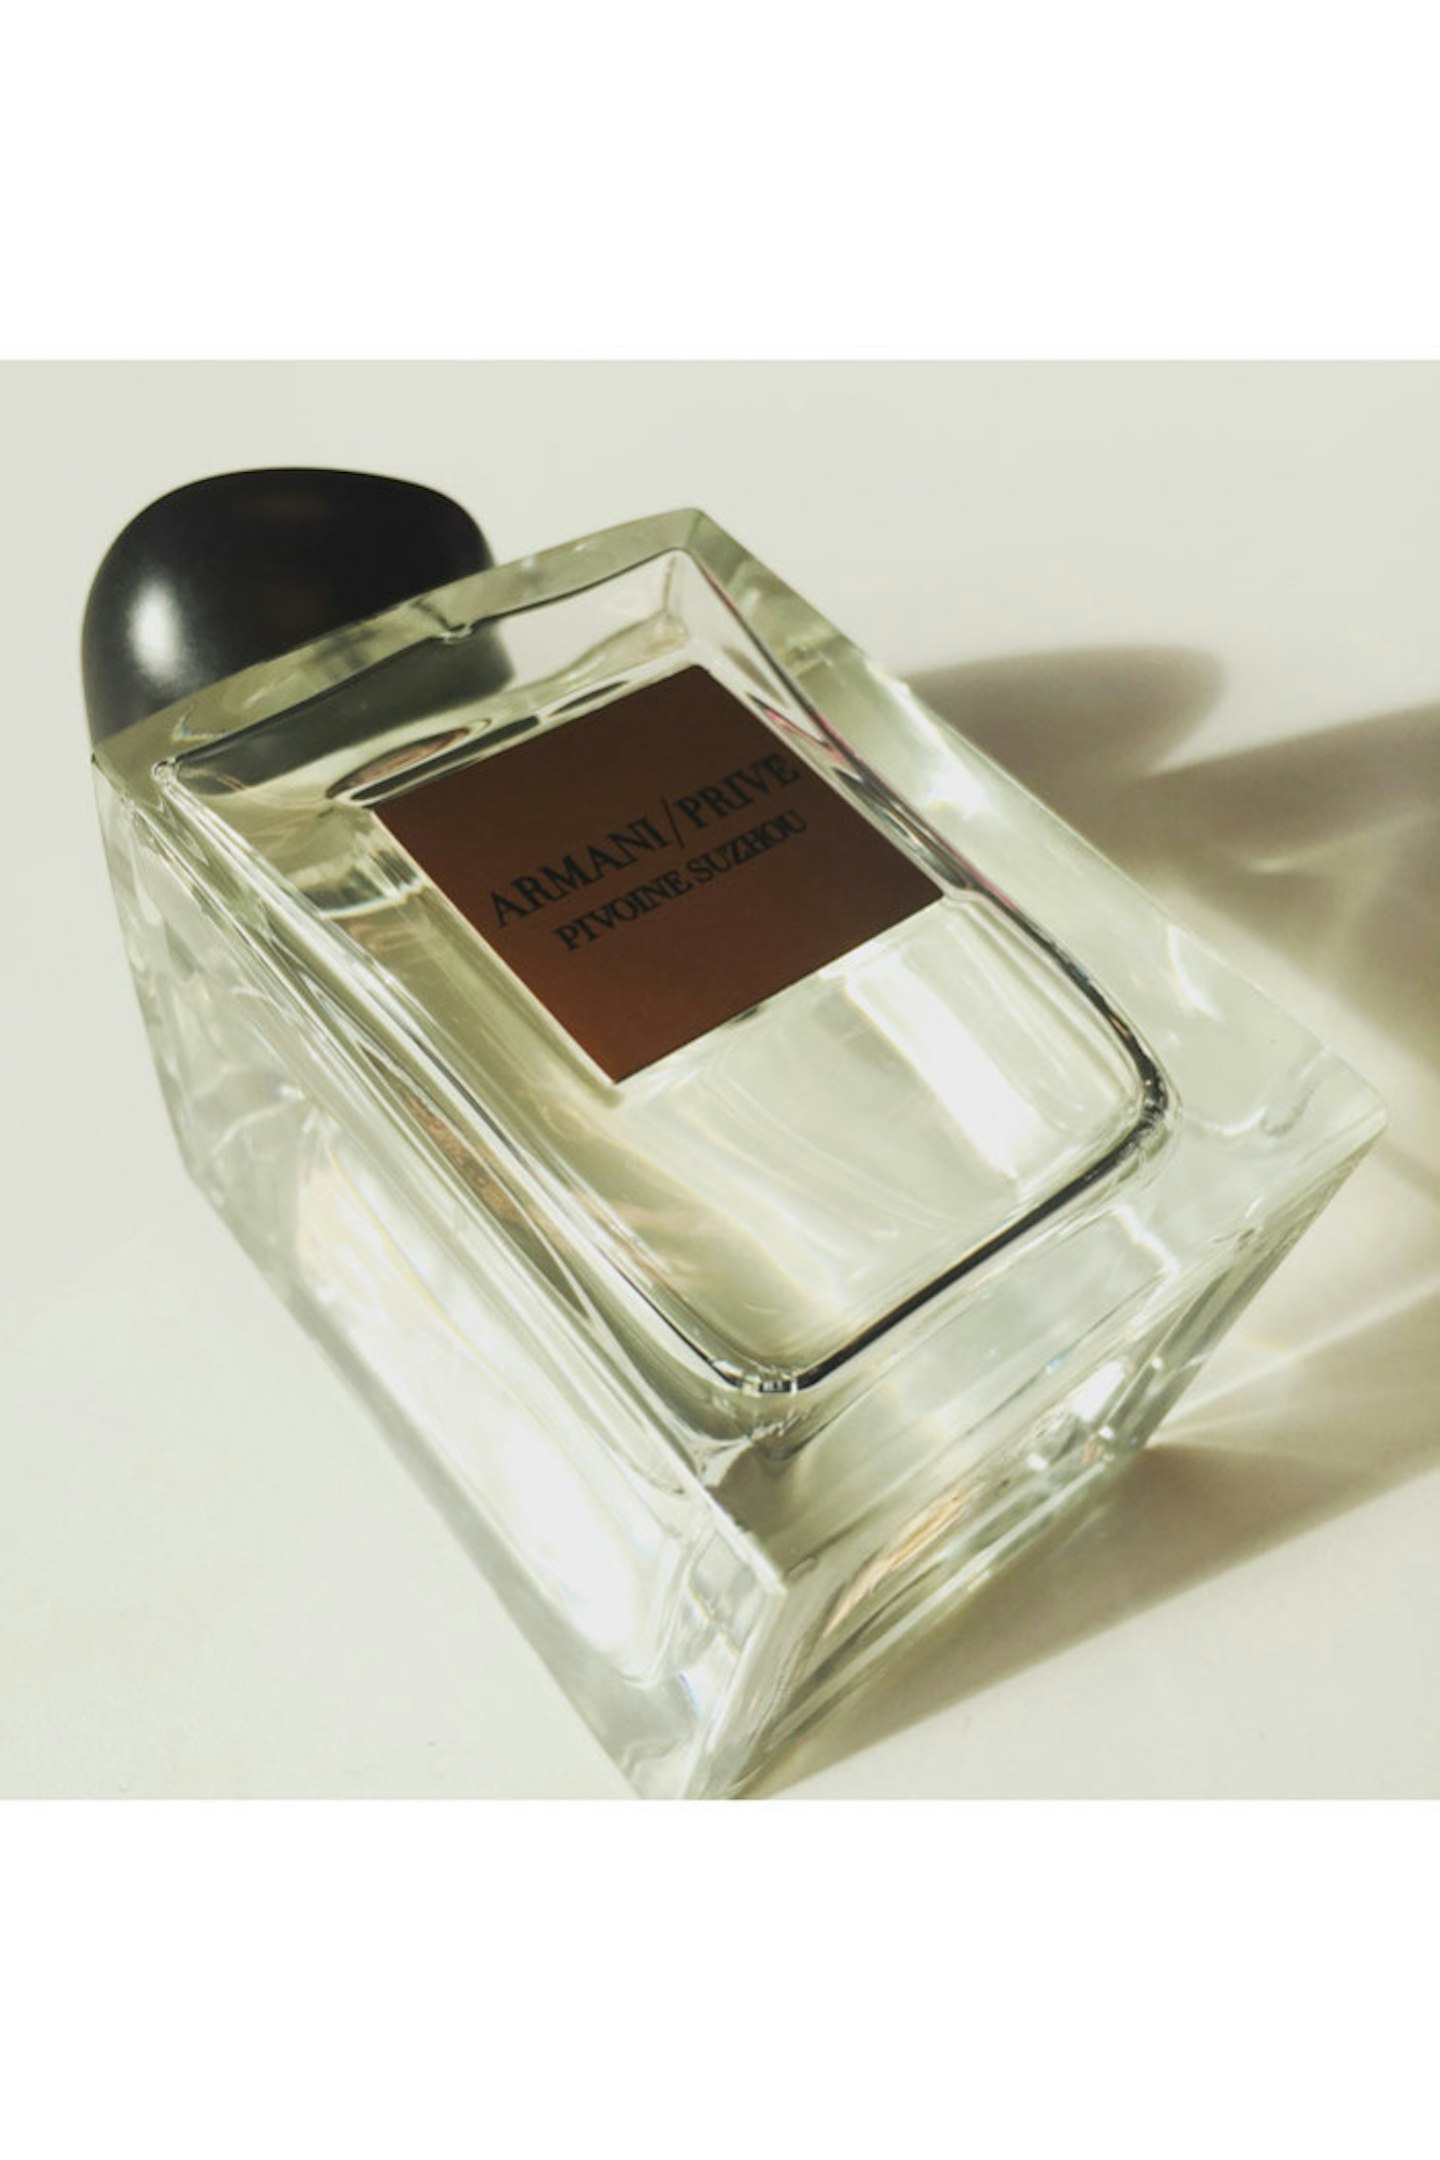 beauty hero giorgio armani pivoine suzhou fragrance